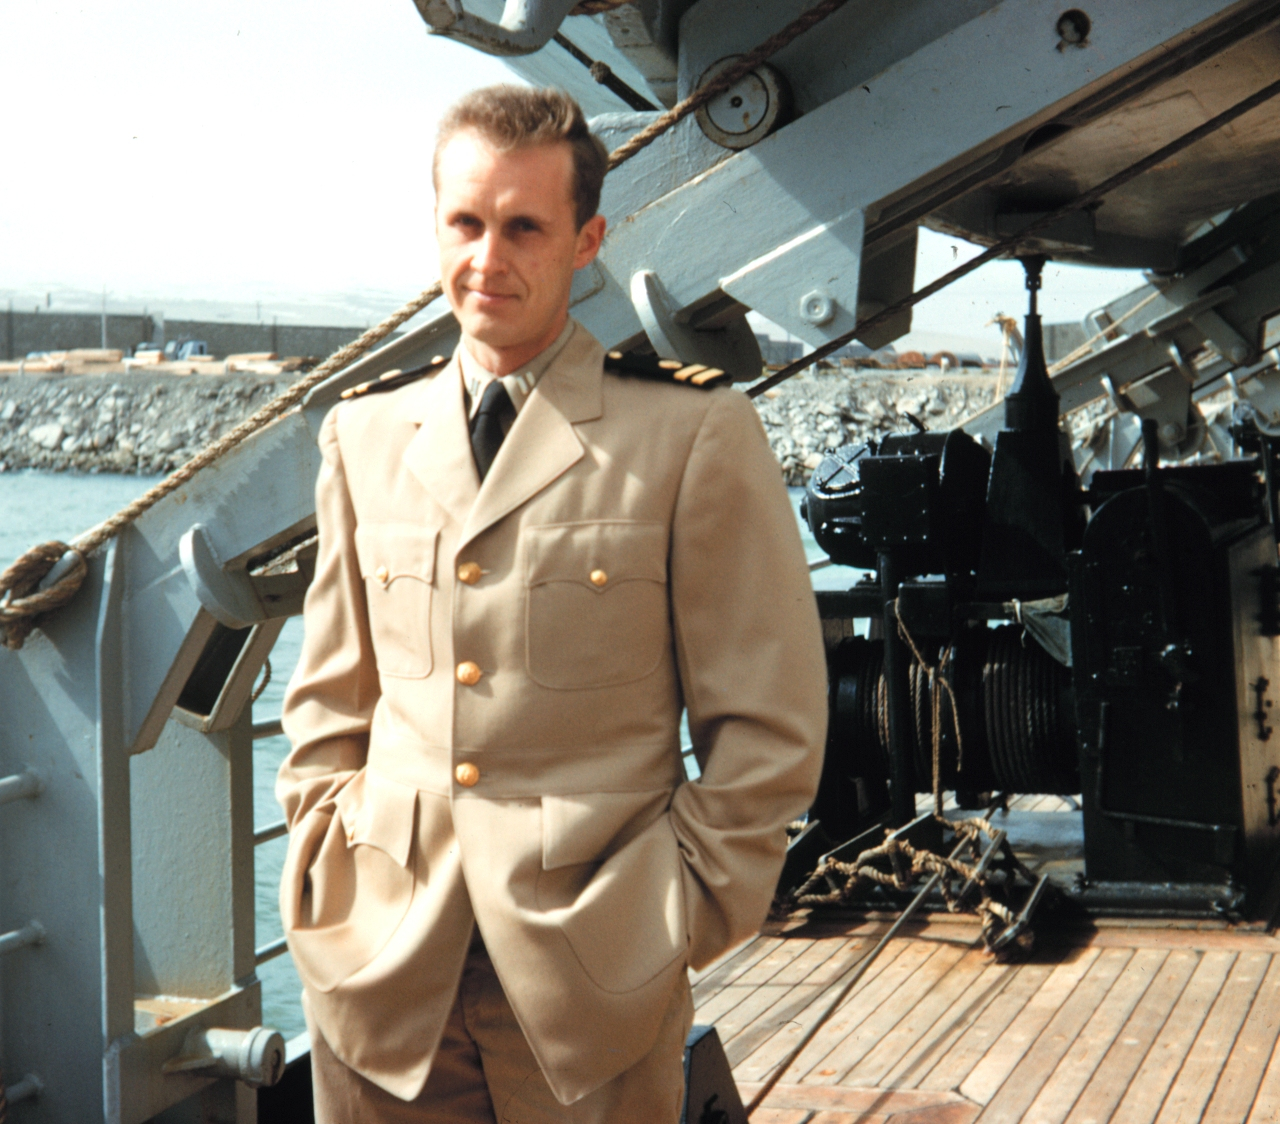 Lieutenant Harley Nygren on the PATHFINDER in dress khakis